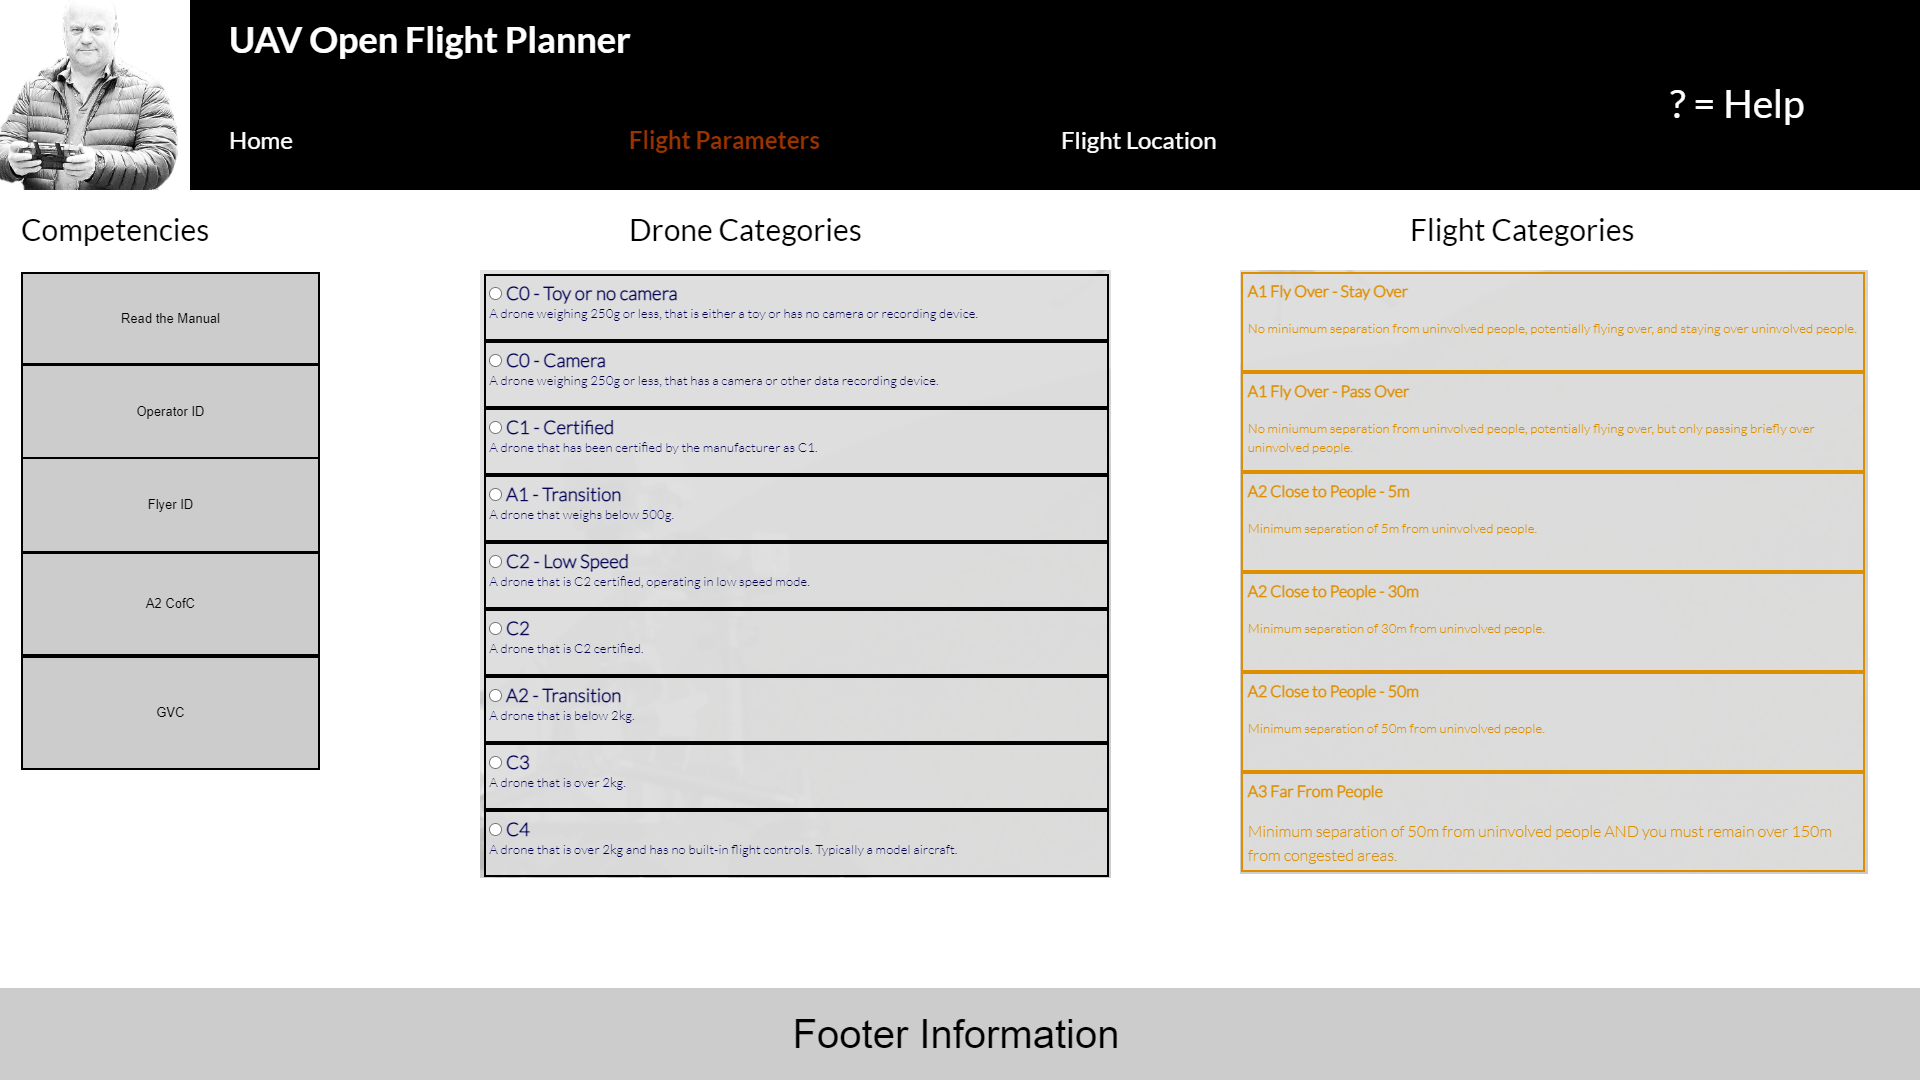 Flight Parameters